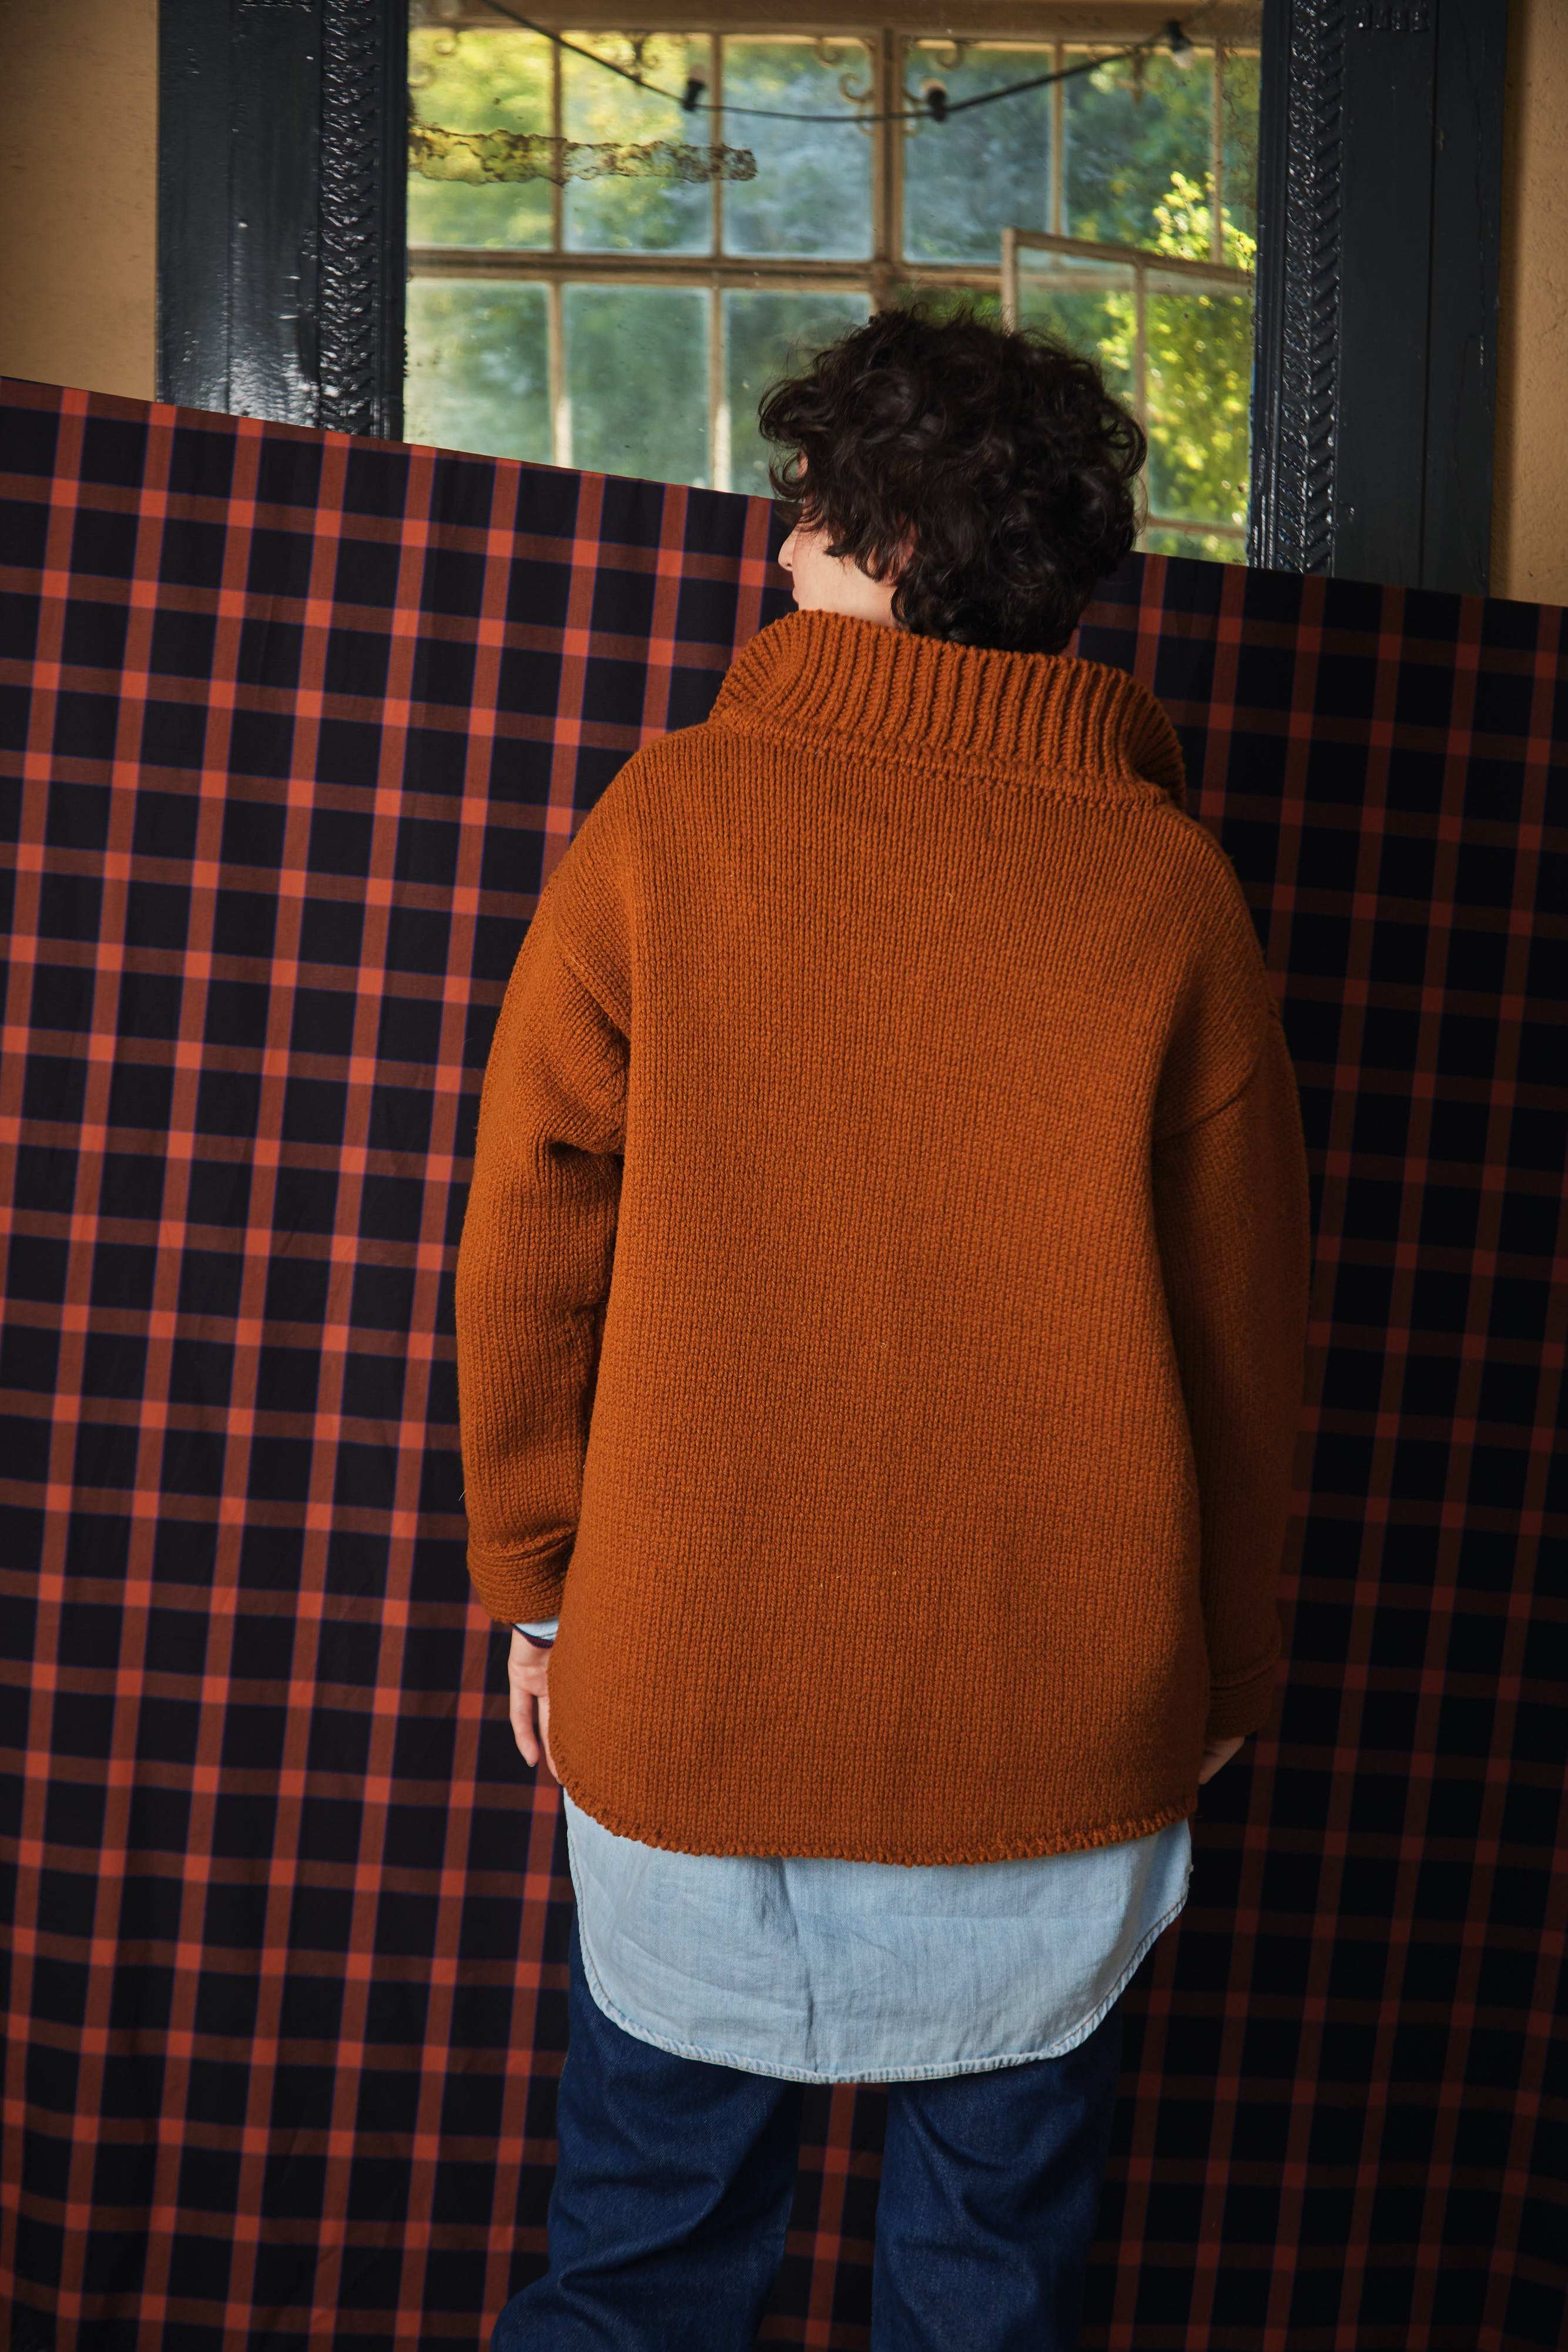 CALAMITY Wool Jacket - 100% Cruelty Free Merino Wool in amber - Spanish Merino Wool jacket - L'Envers